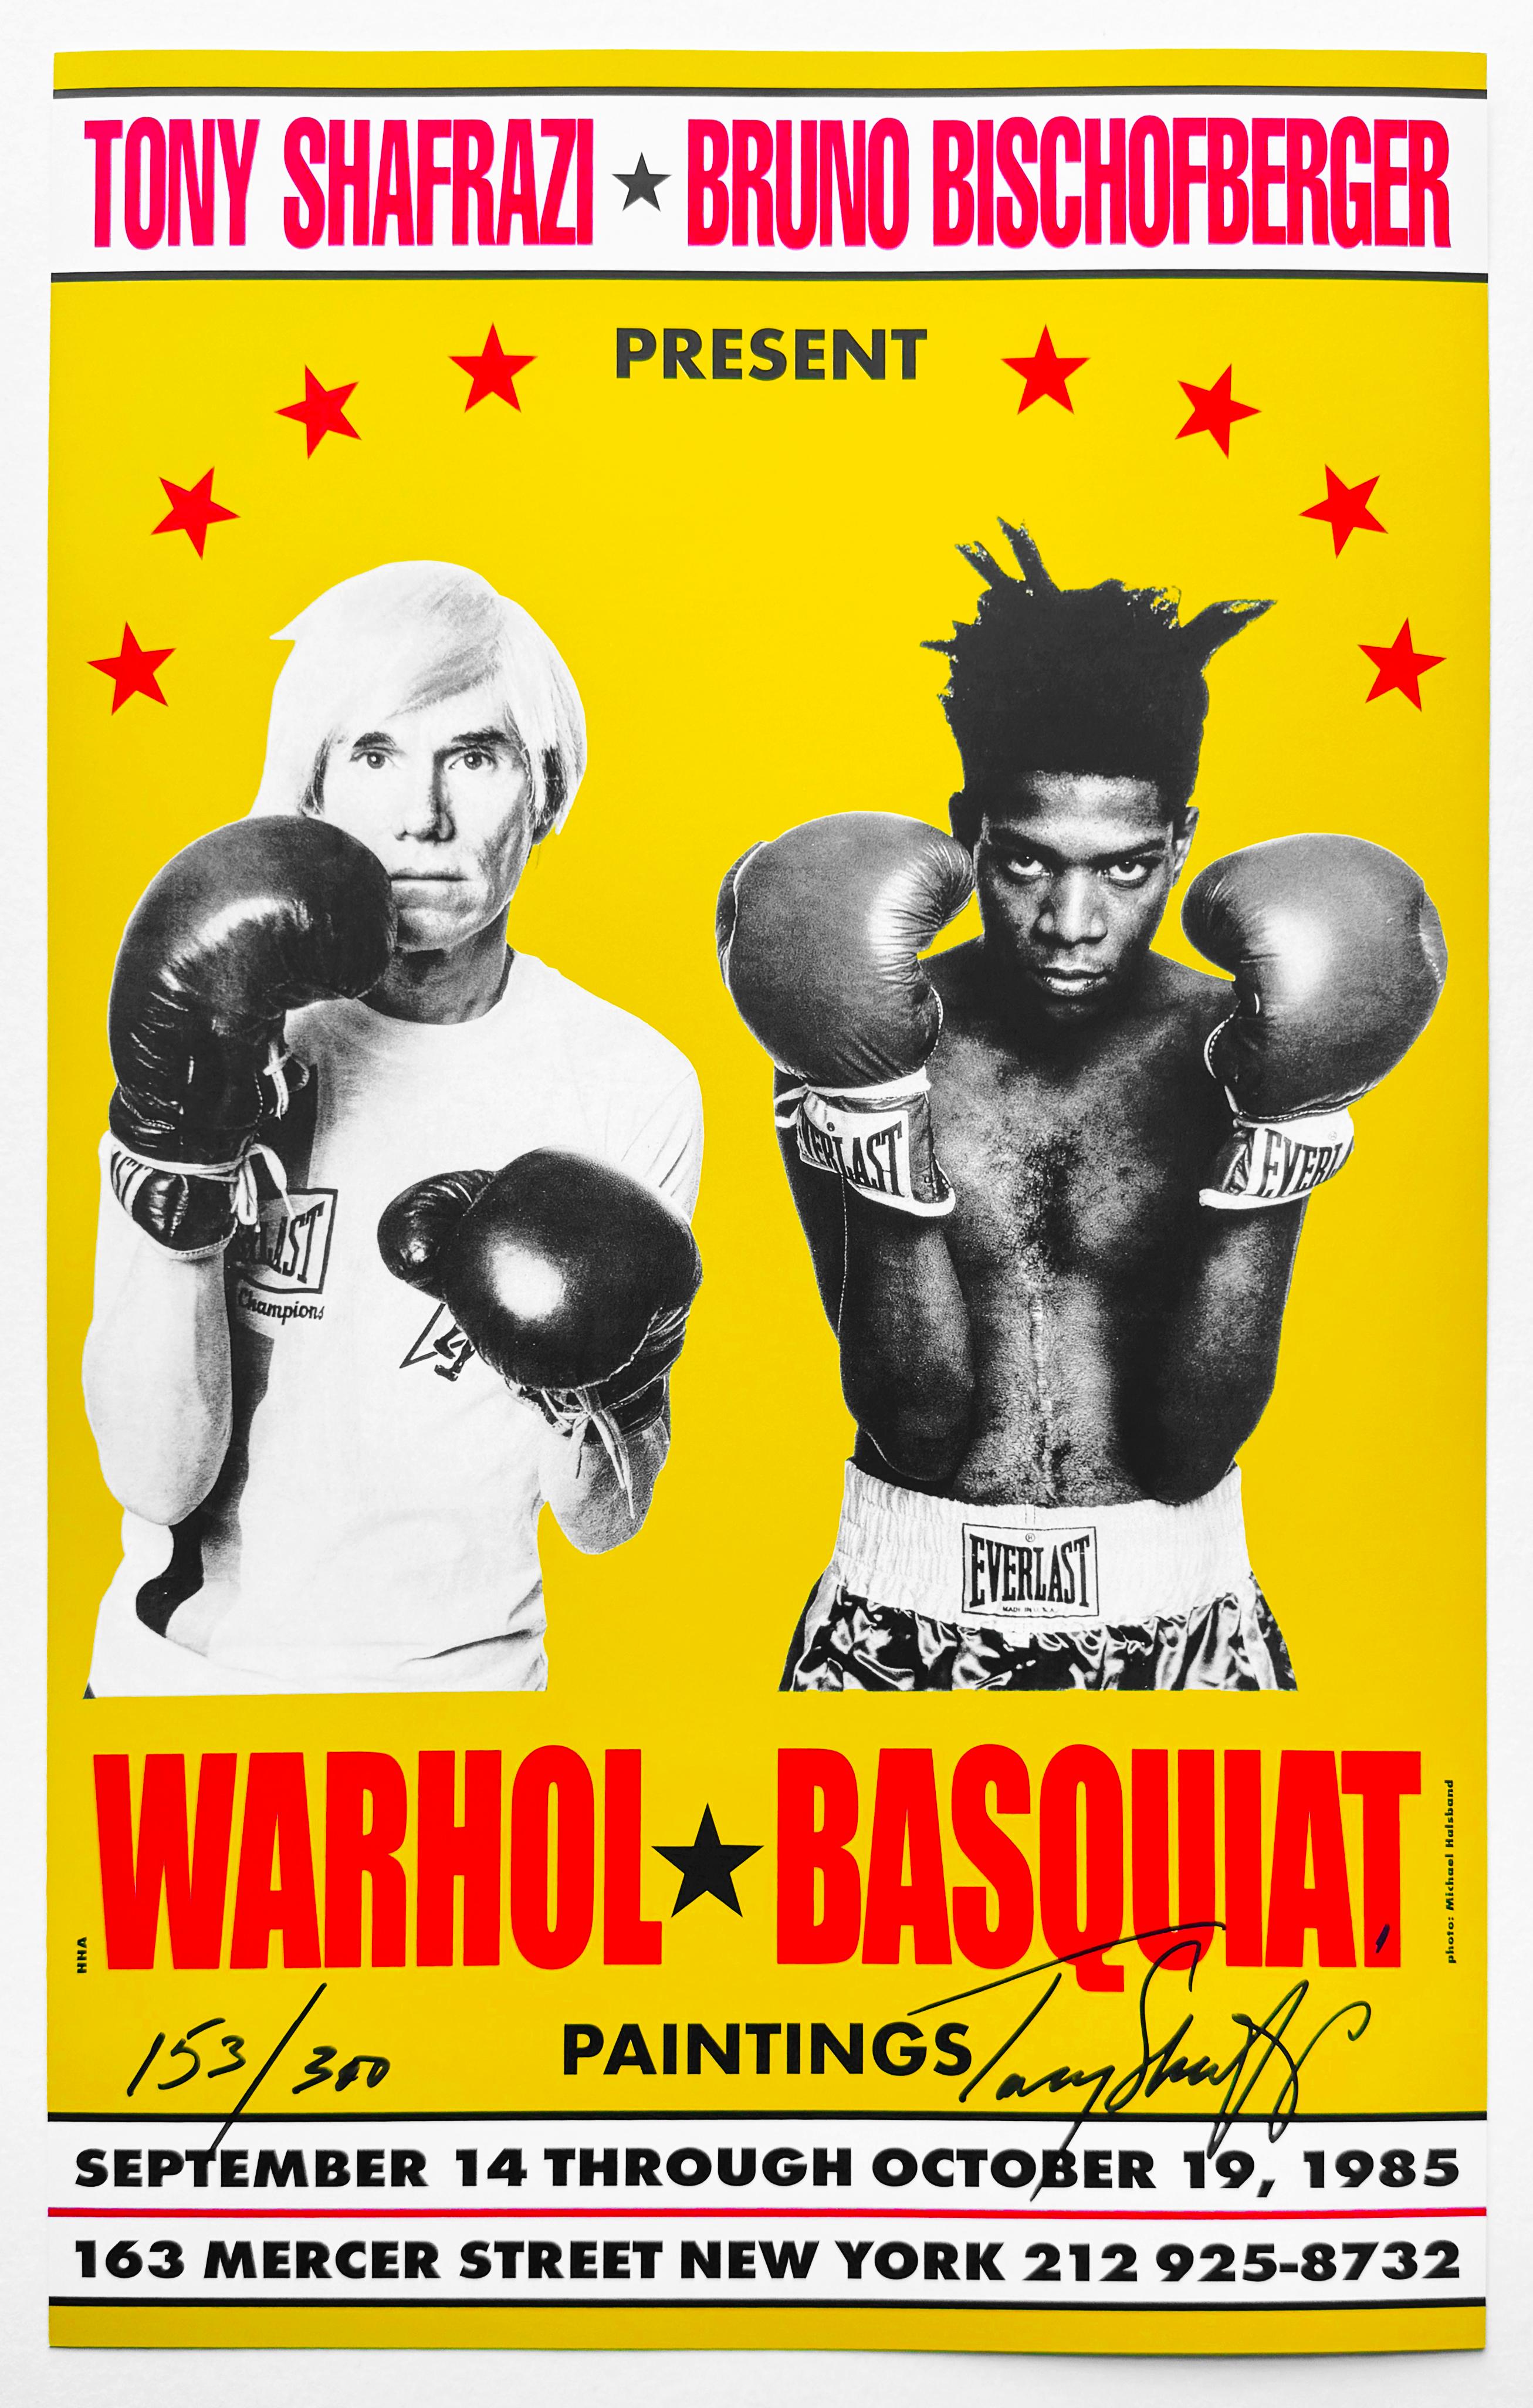 Jean-Michel Basquiat Portrait Print - Warhol-Basquiat Limited Edition Poster (30th Anniversary Edition)